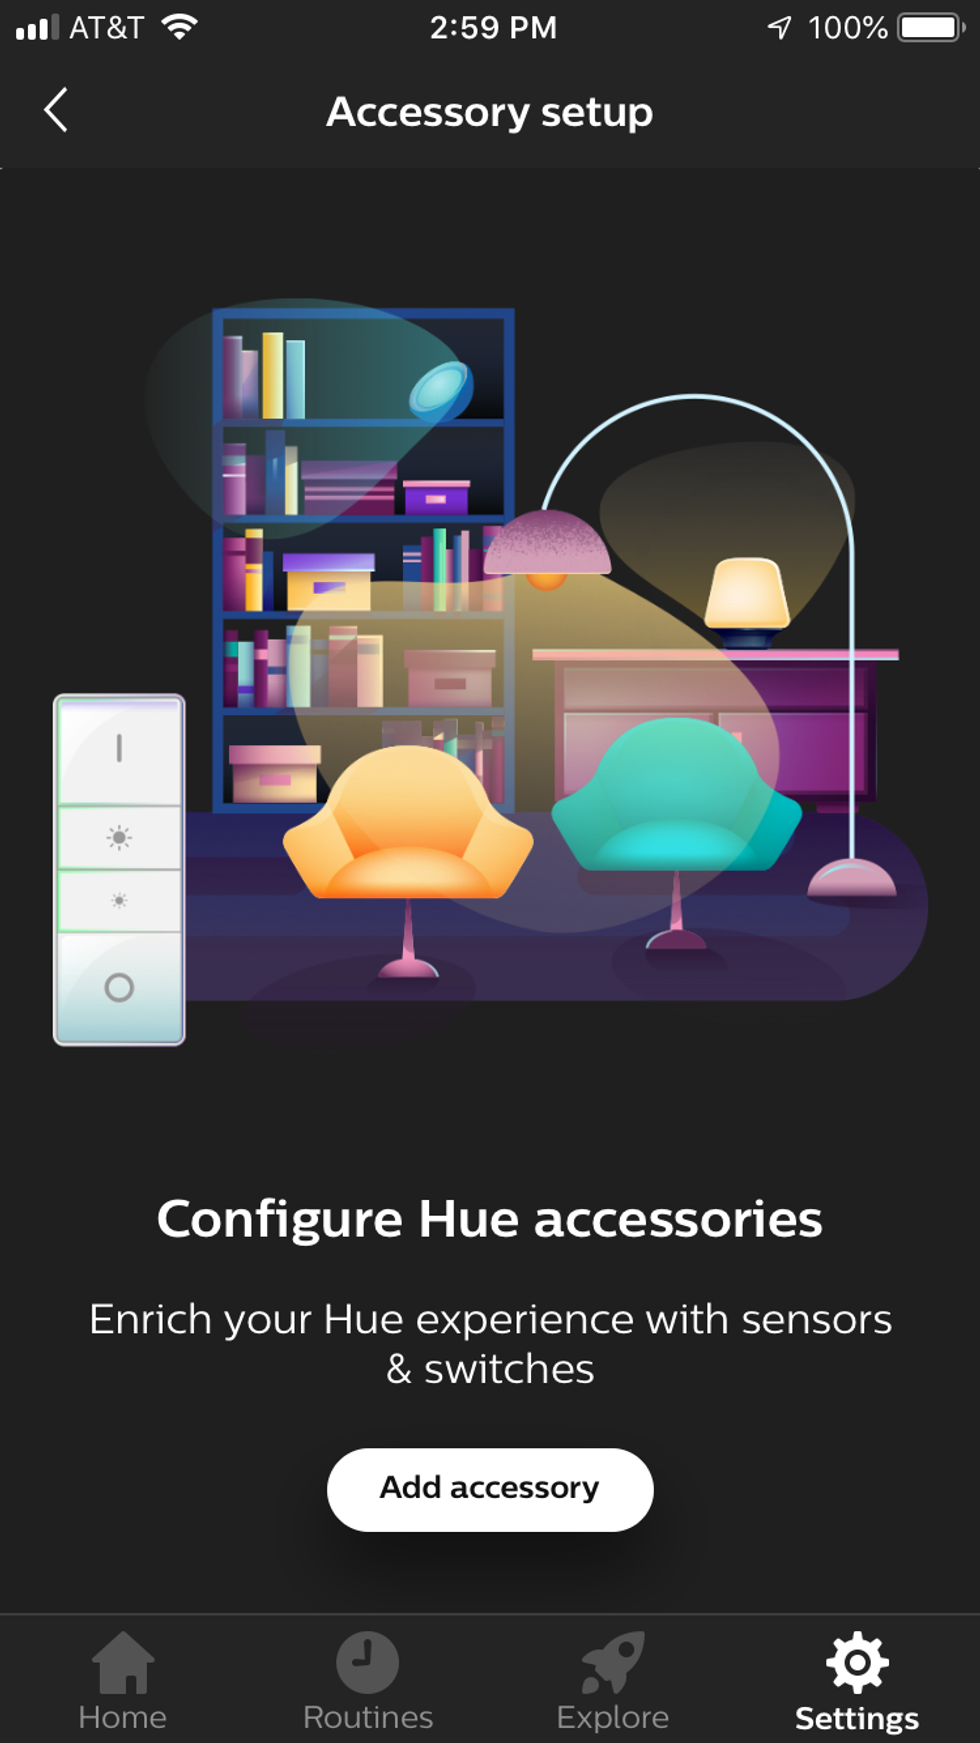 screenshot of hue app accessory setup screen